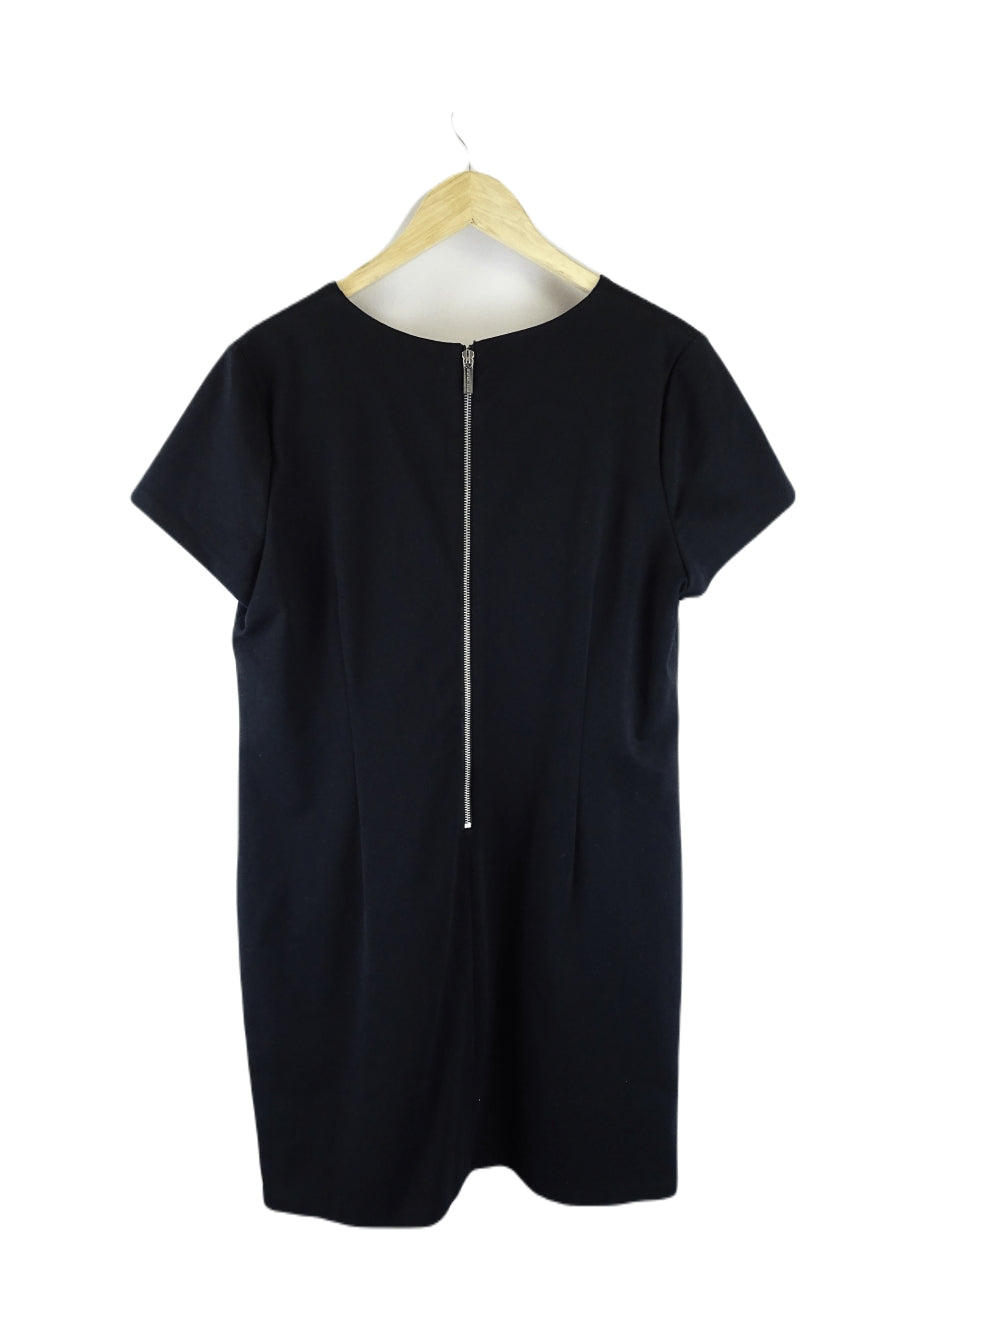 Michael Kors Black Mini Dress XL